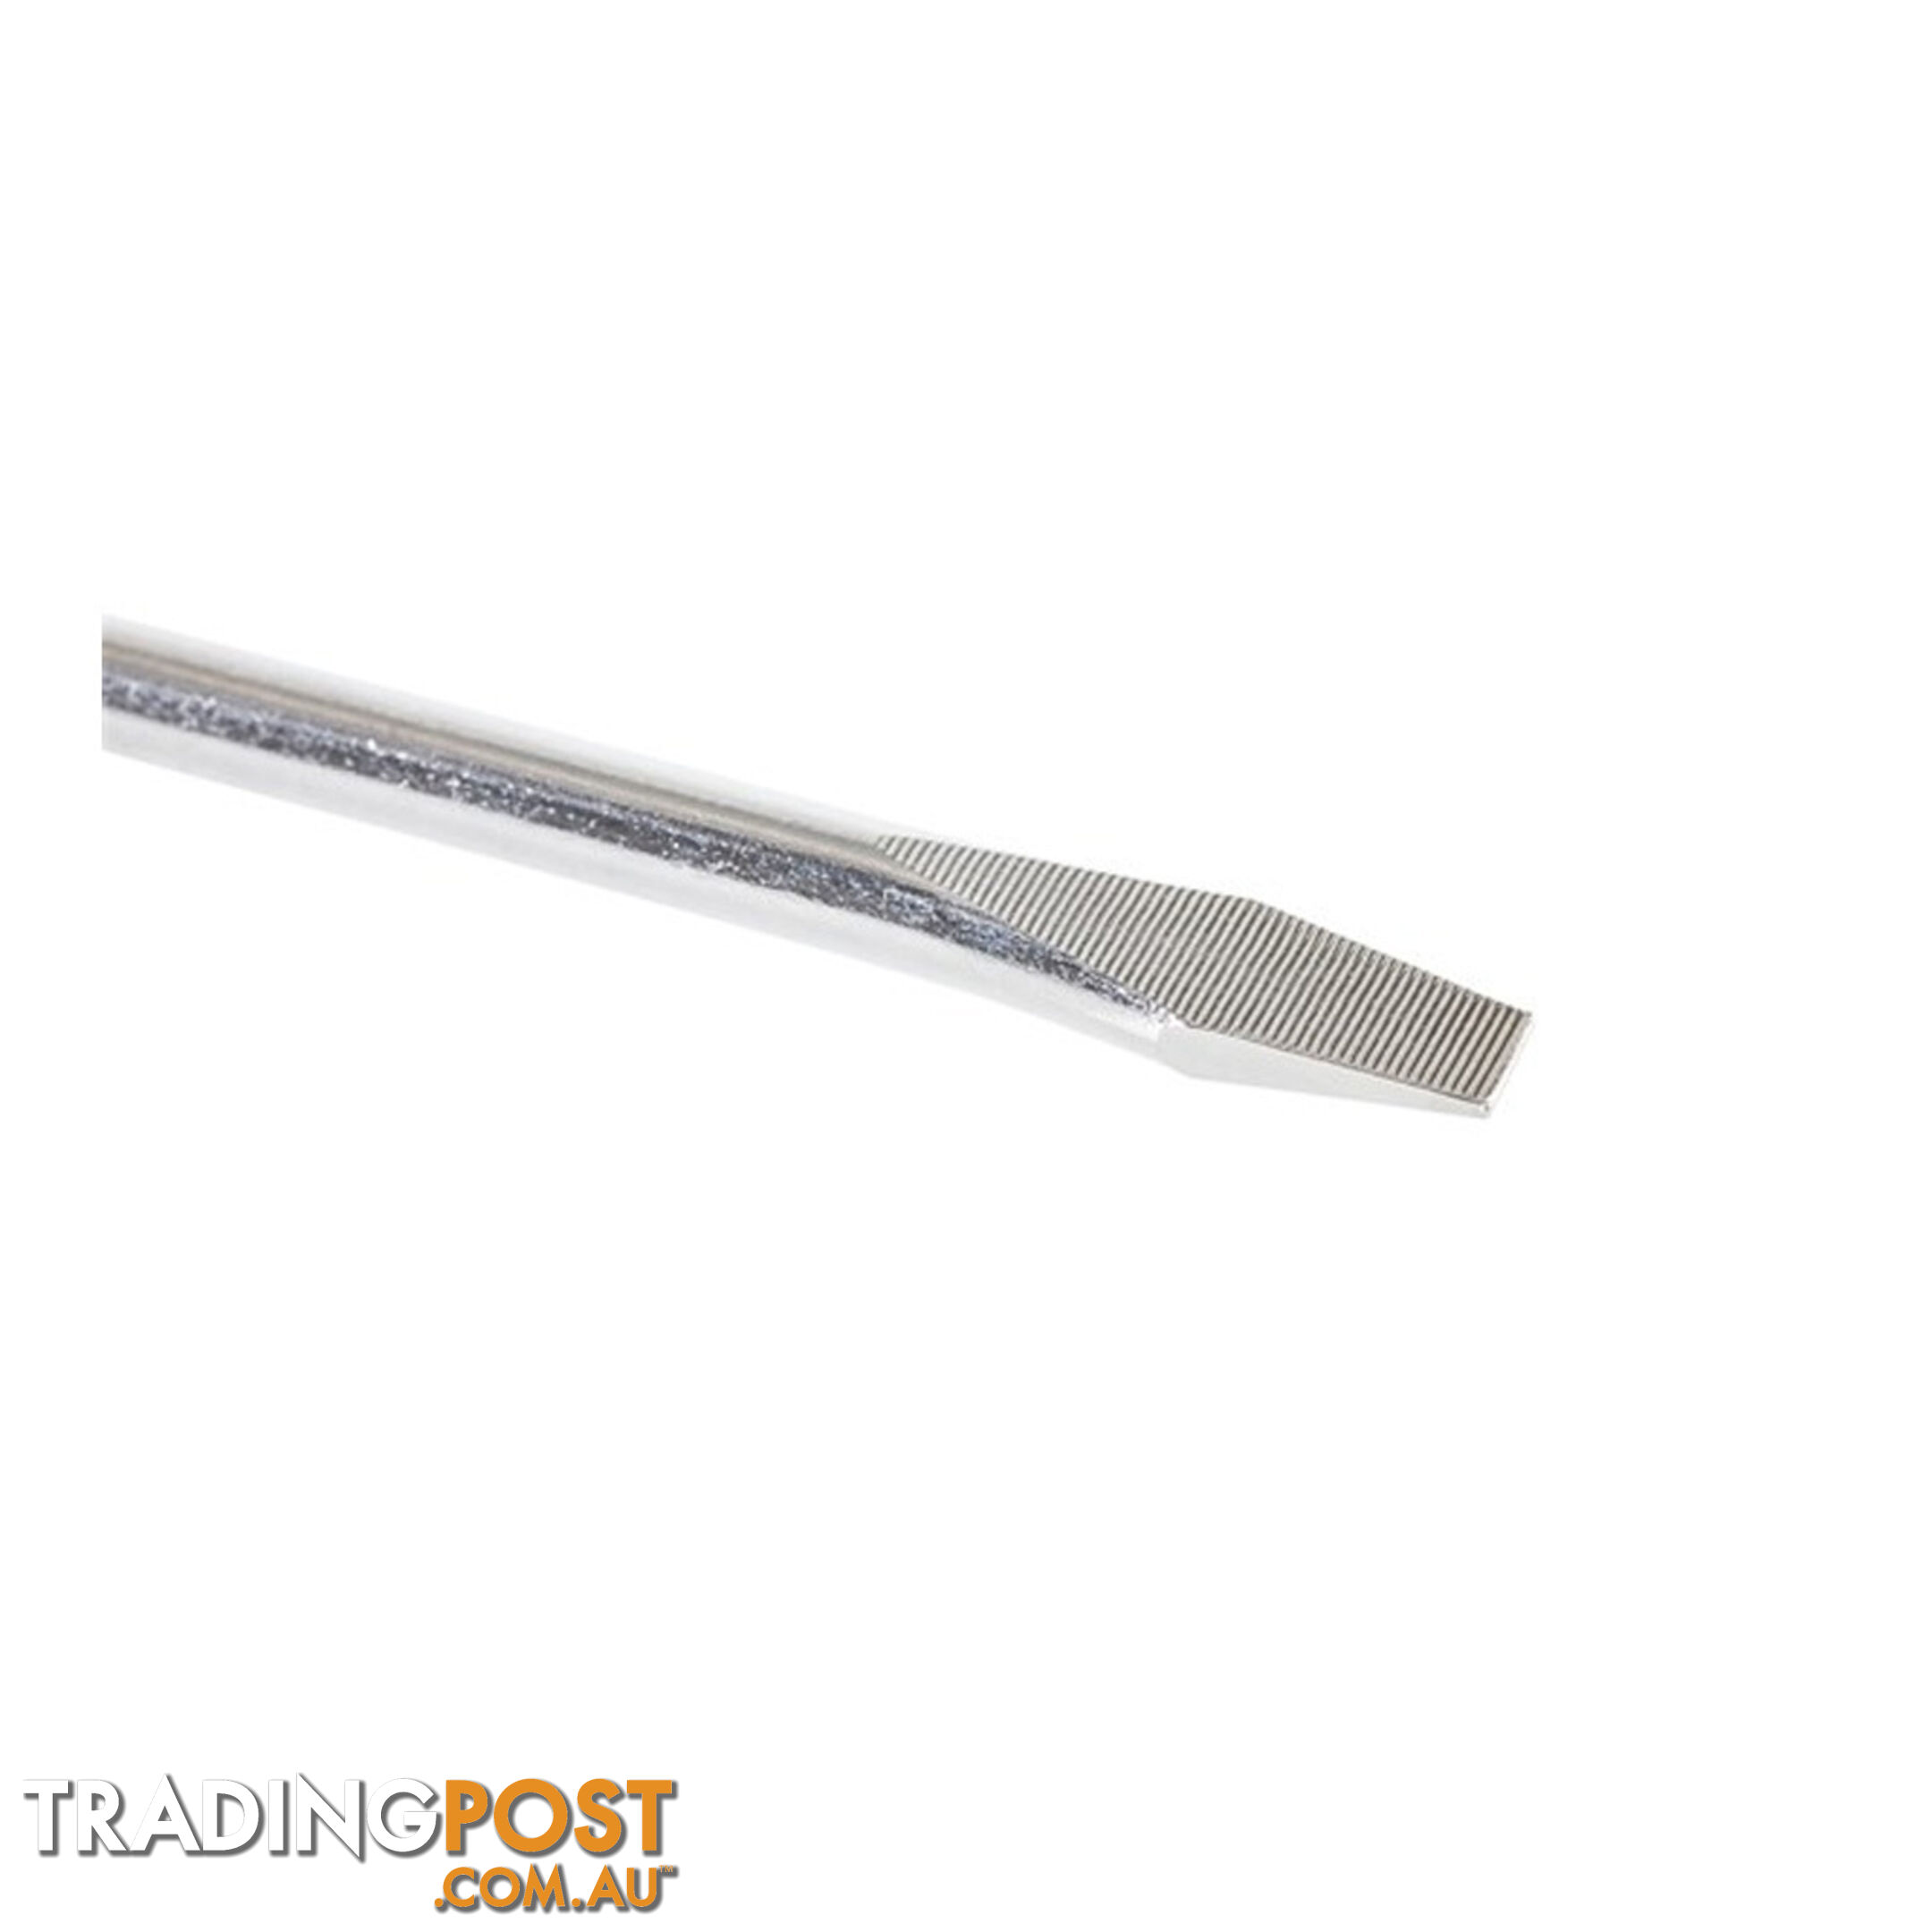 Toledo Pocket Screwdriver Flat Blade SKU - 321992